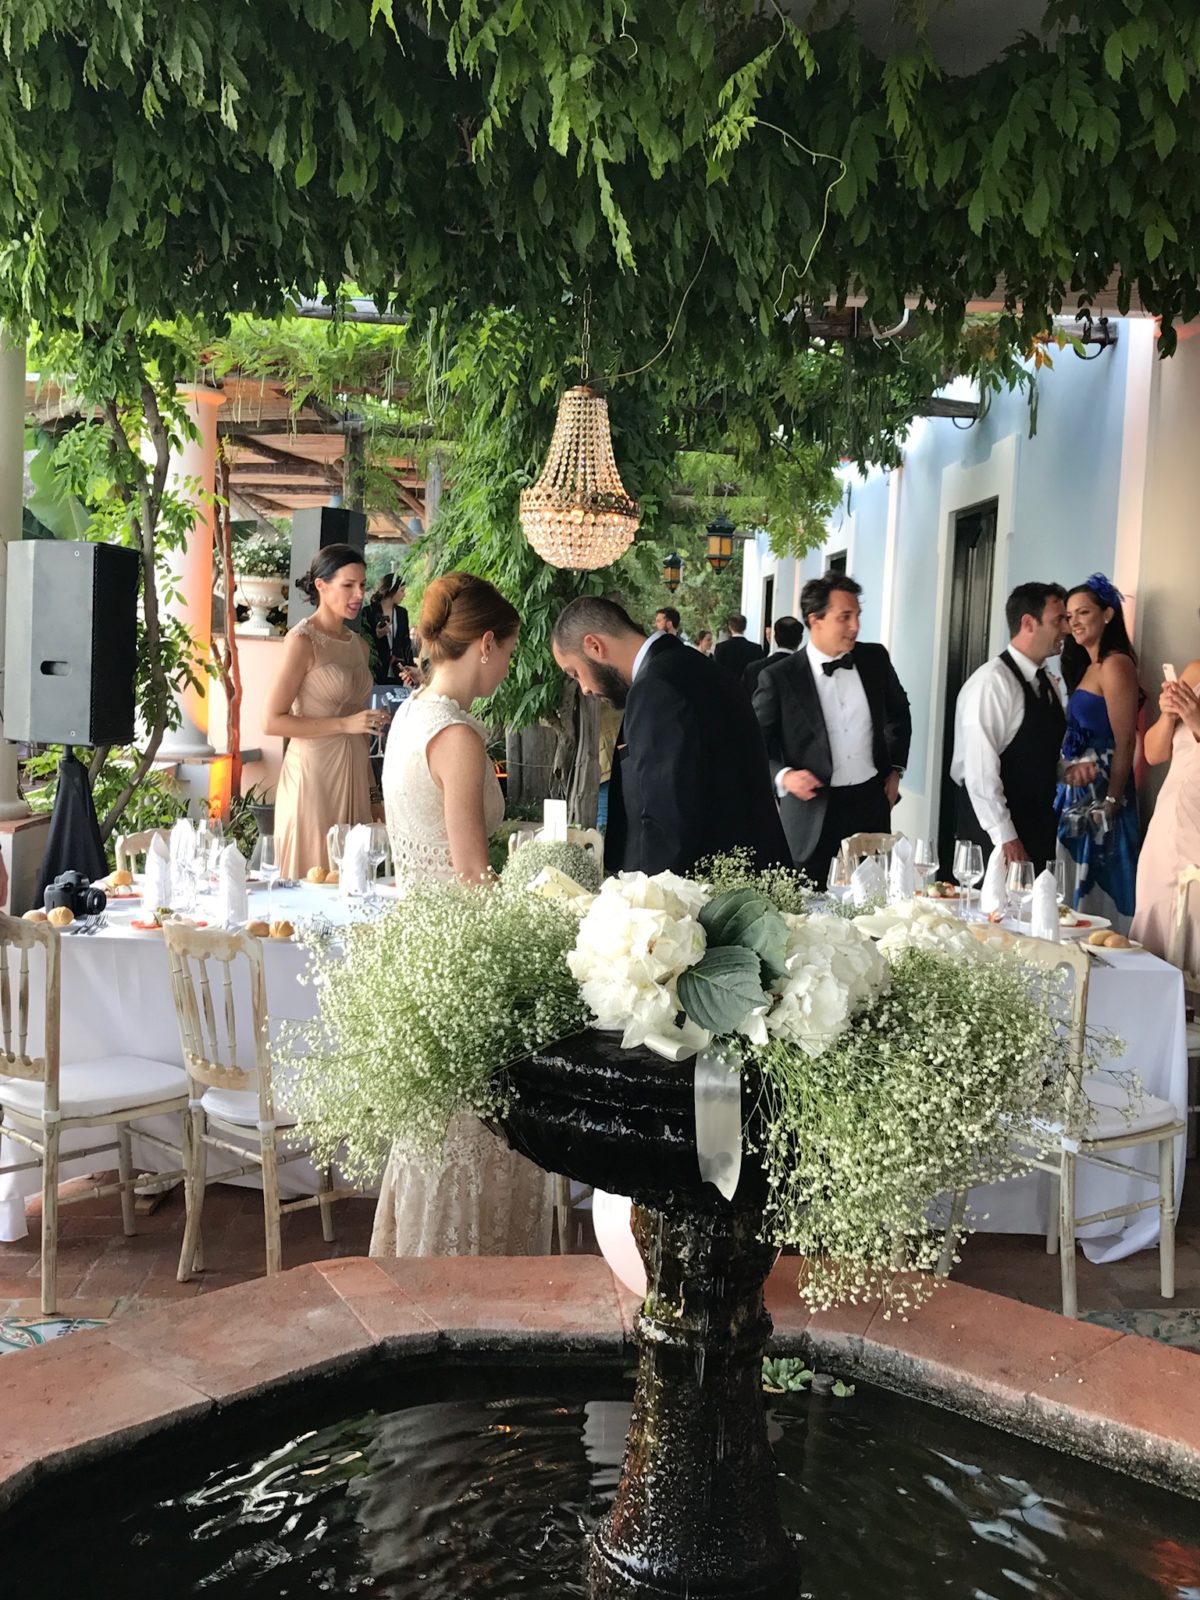 Nathalie and Benjamin Wedding in Positano Italy (31)